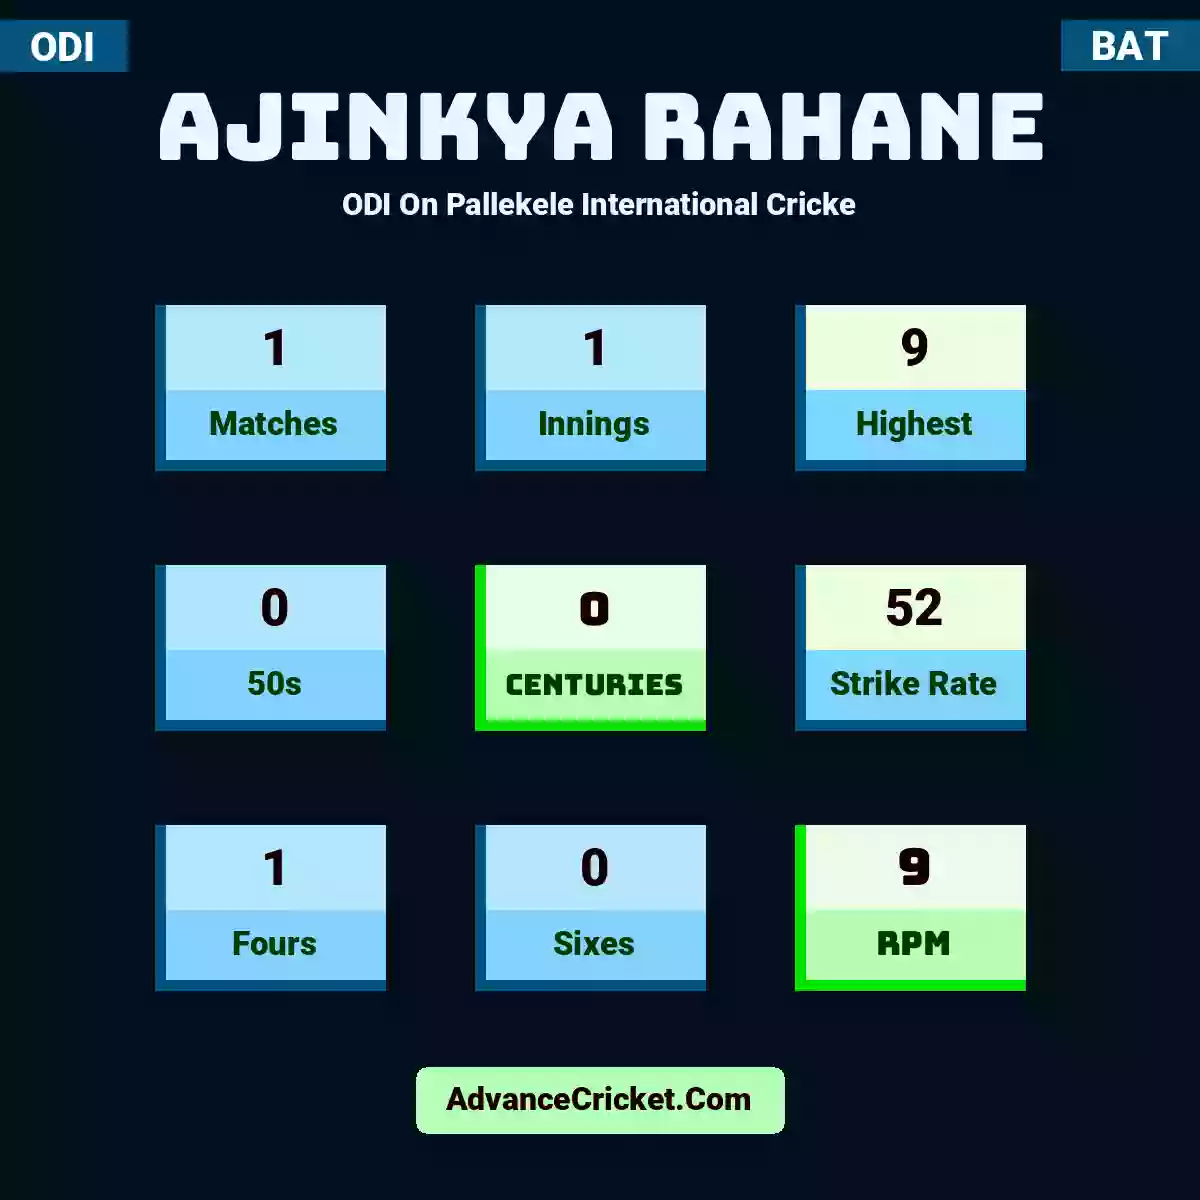 Ajinkya Rahane ODI  On Pallekele International Cricke, Ajinkya Rahane played 1 matches, scored 9 runs as highest, 0 half-centuries, and 0 centuries, with a strike rate of 52. A.Rahane hit 1 fours and 0 sixes, with an RPM of 9.